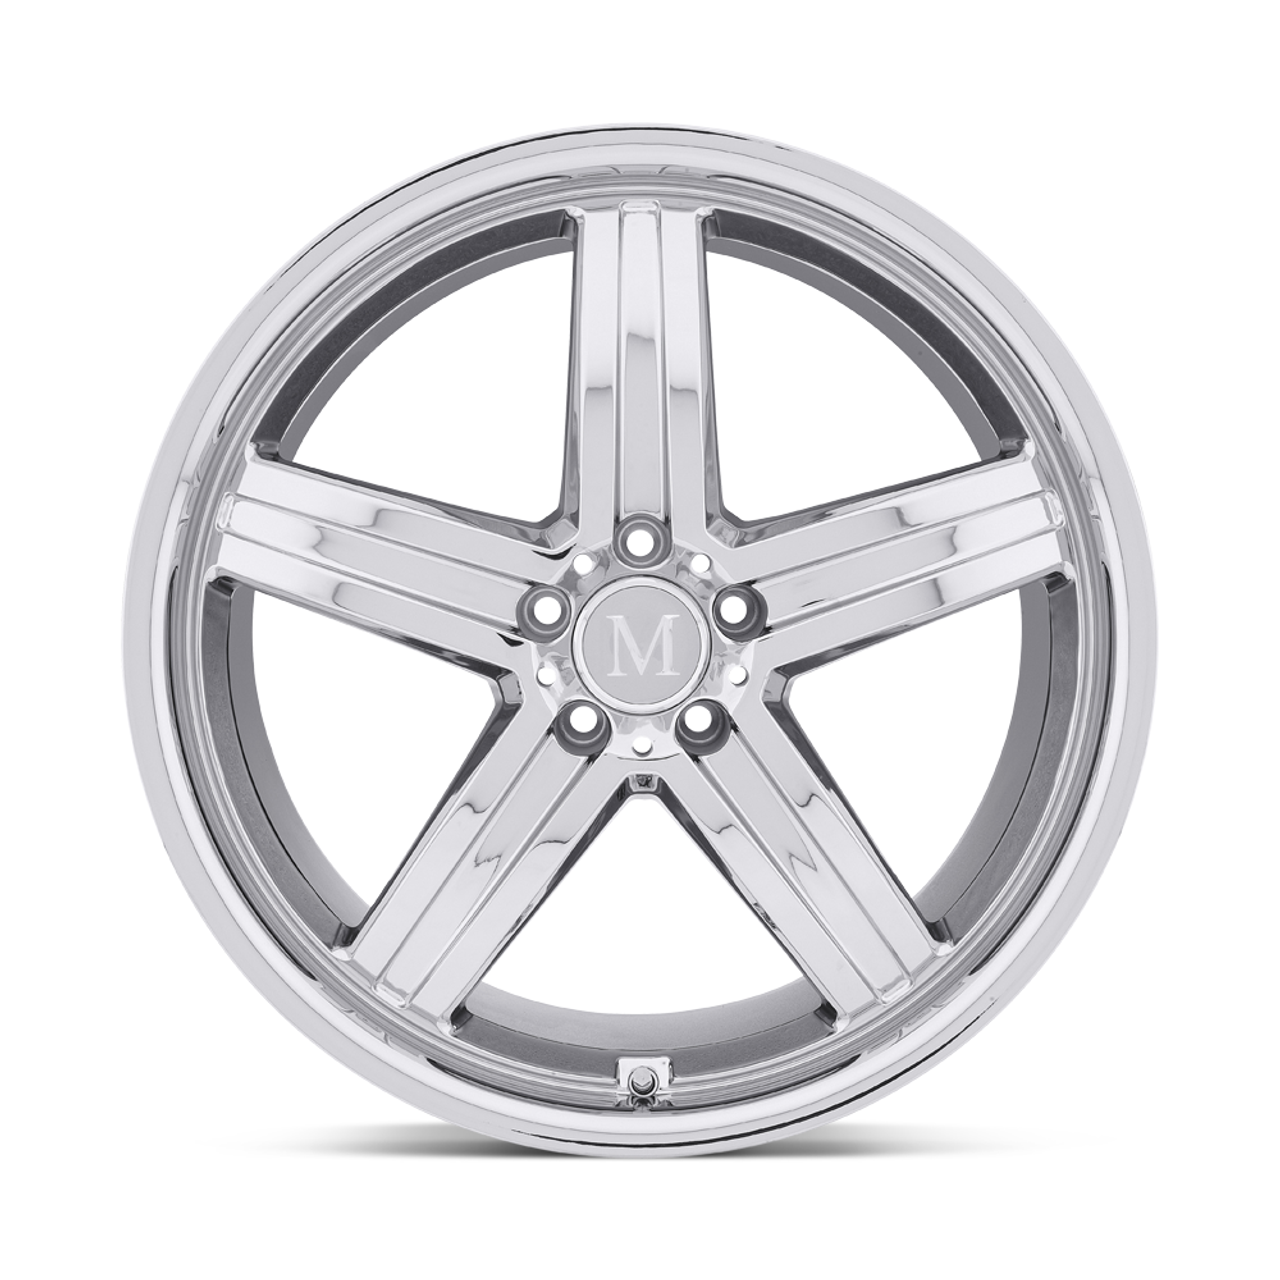 Mandrus Mannheim 22x10.5 5x112 Chrome Wheel 22" 42mm Rim